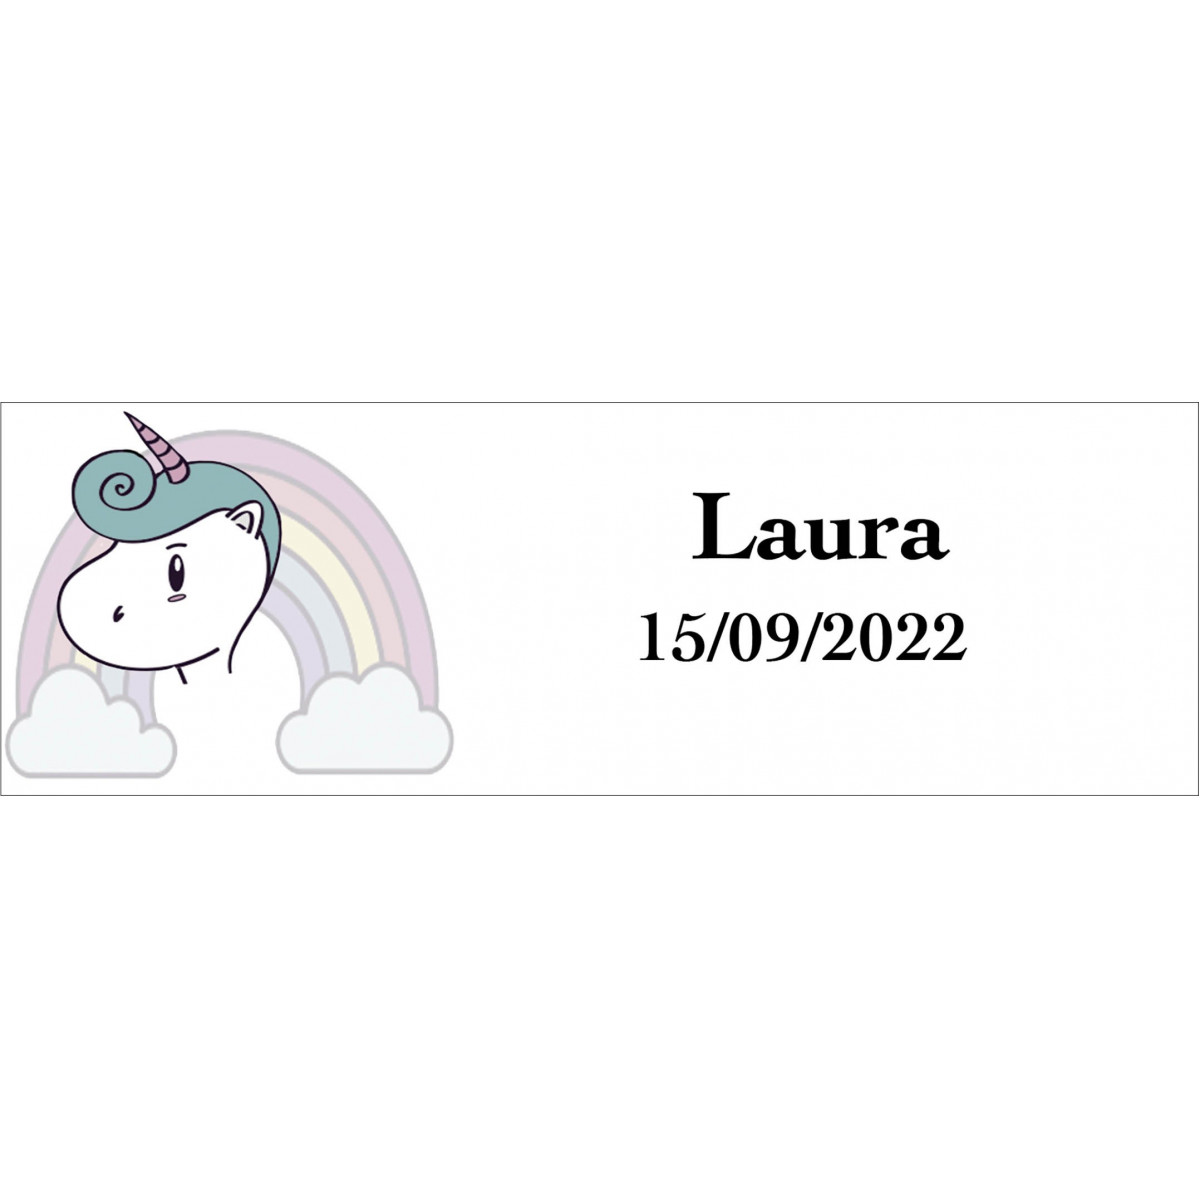 Adhesivo unicornio arcoíris rectangular personalizado nombre y fecha para bodas bautizos comunión cumpleaños o empresas